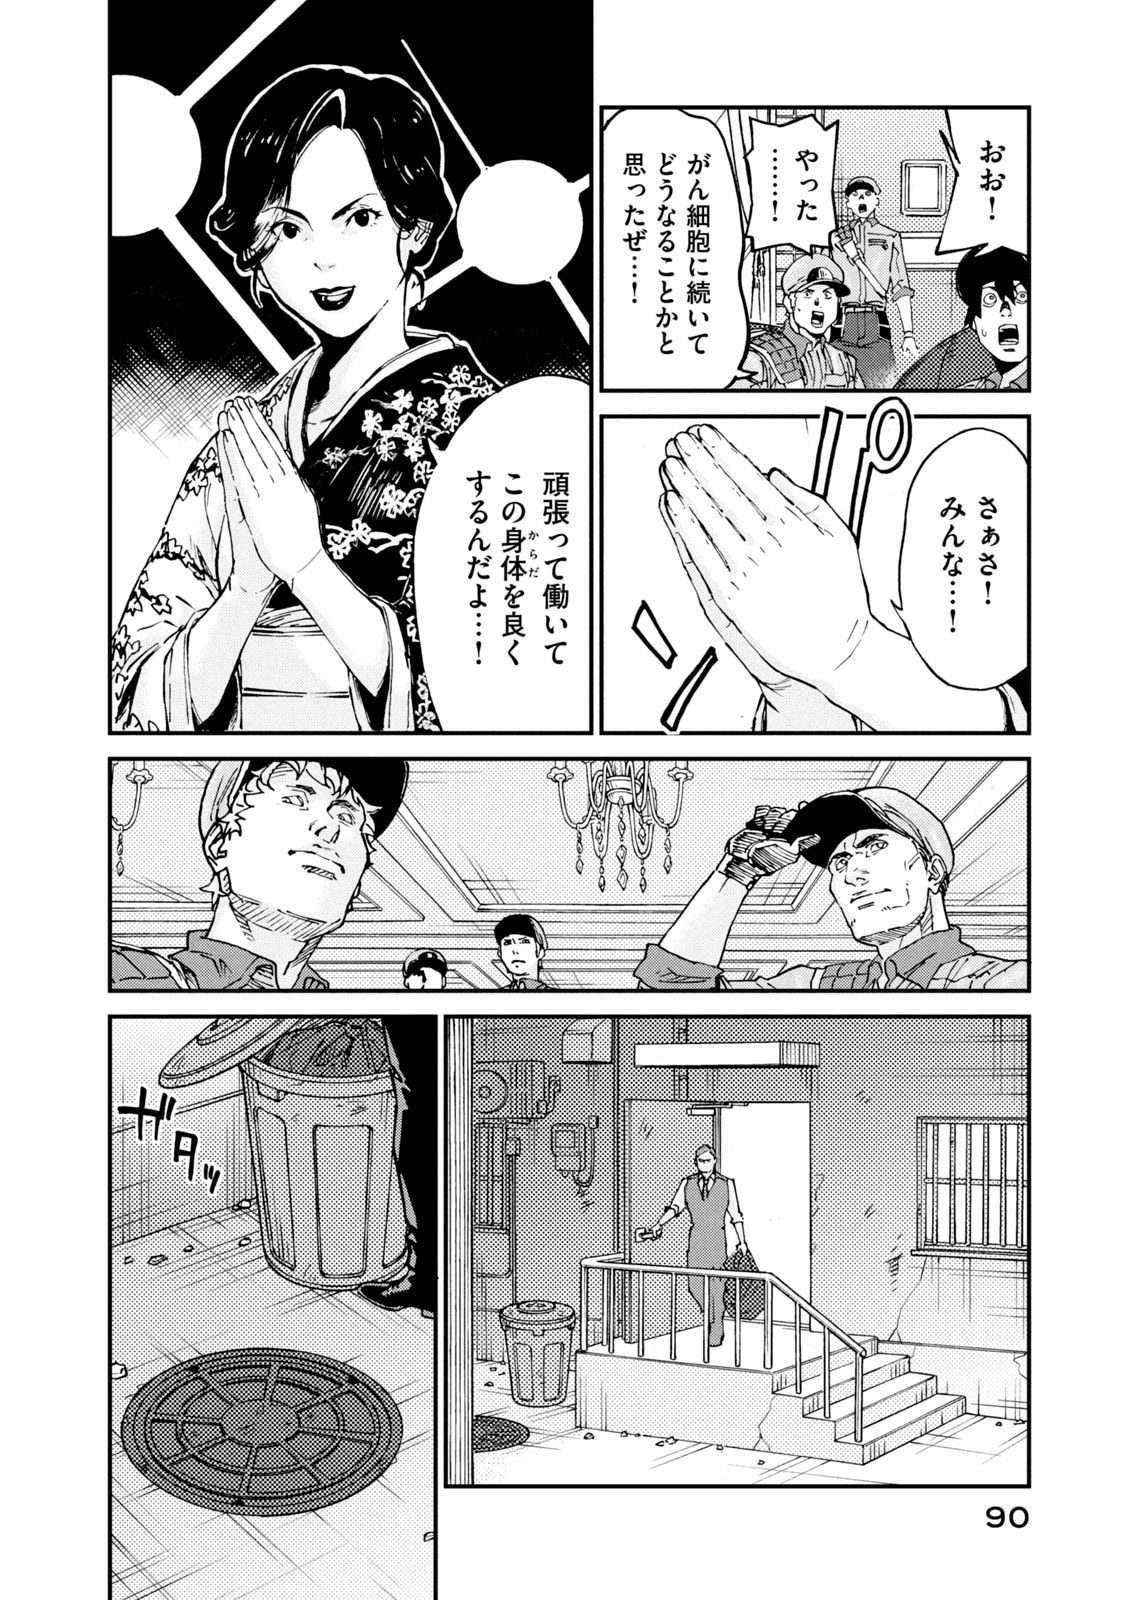 Hataraku Saibou BLACK - Chapter 39 - Page 28